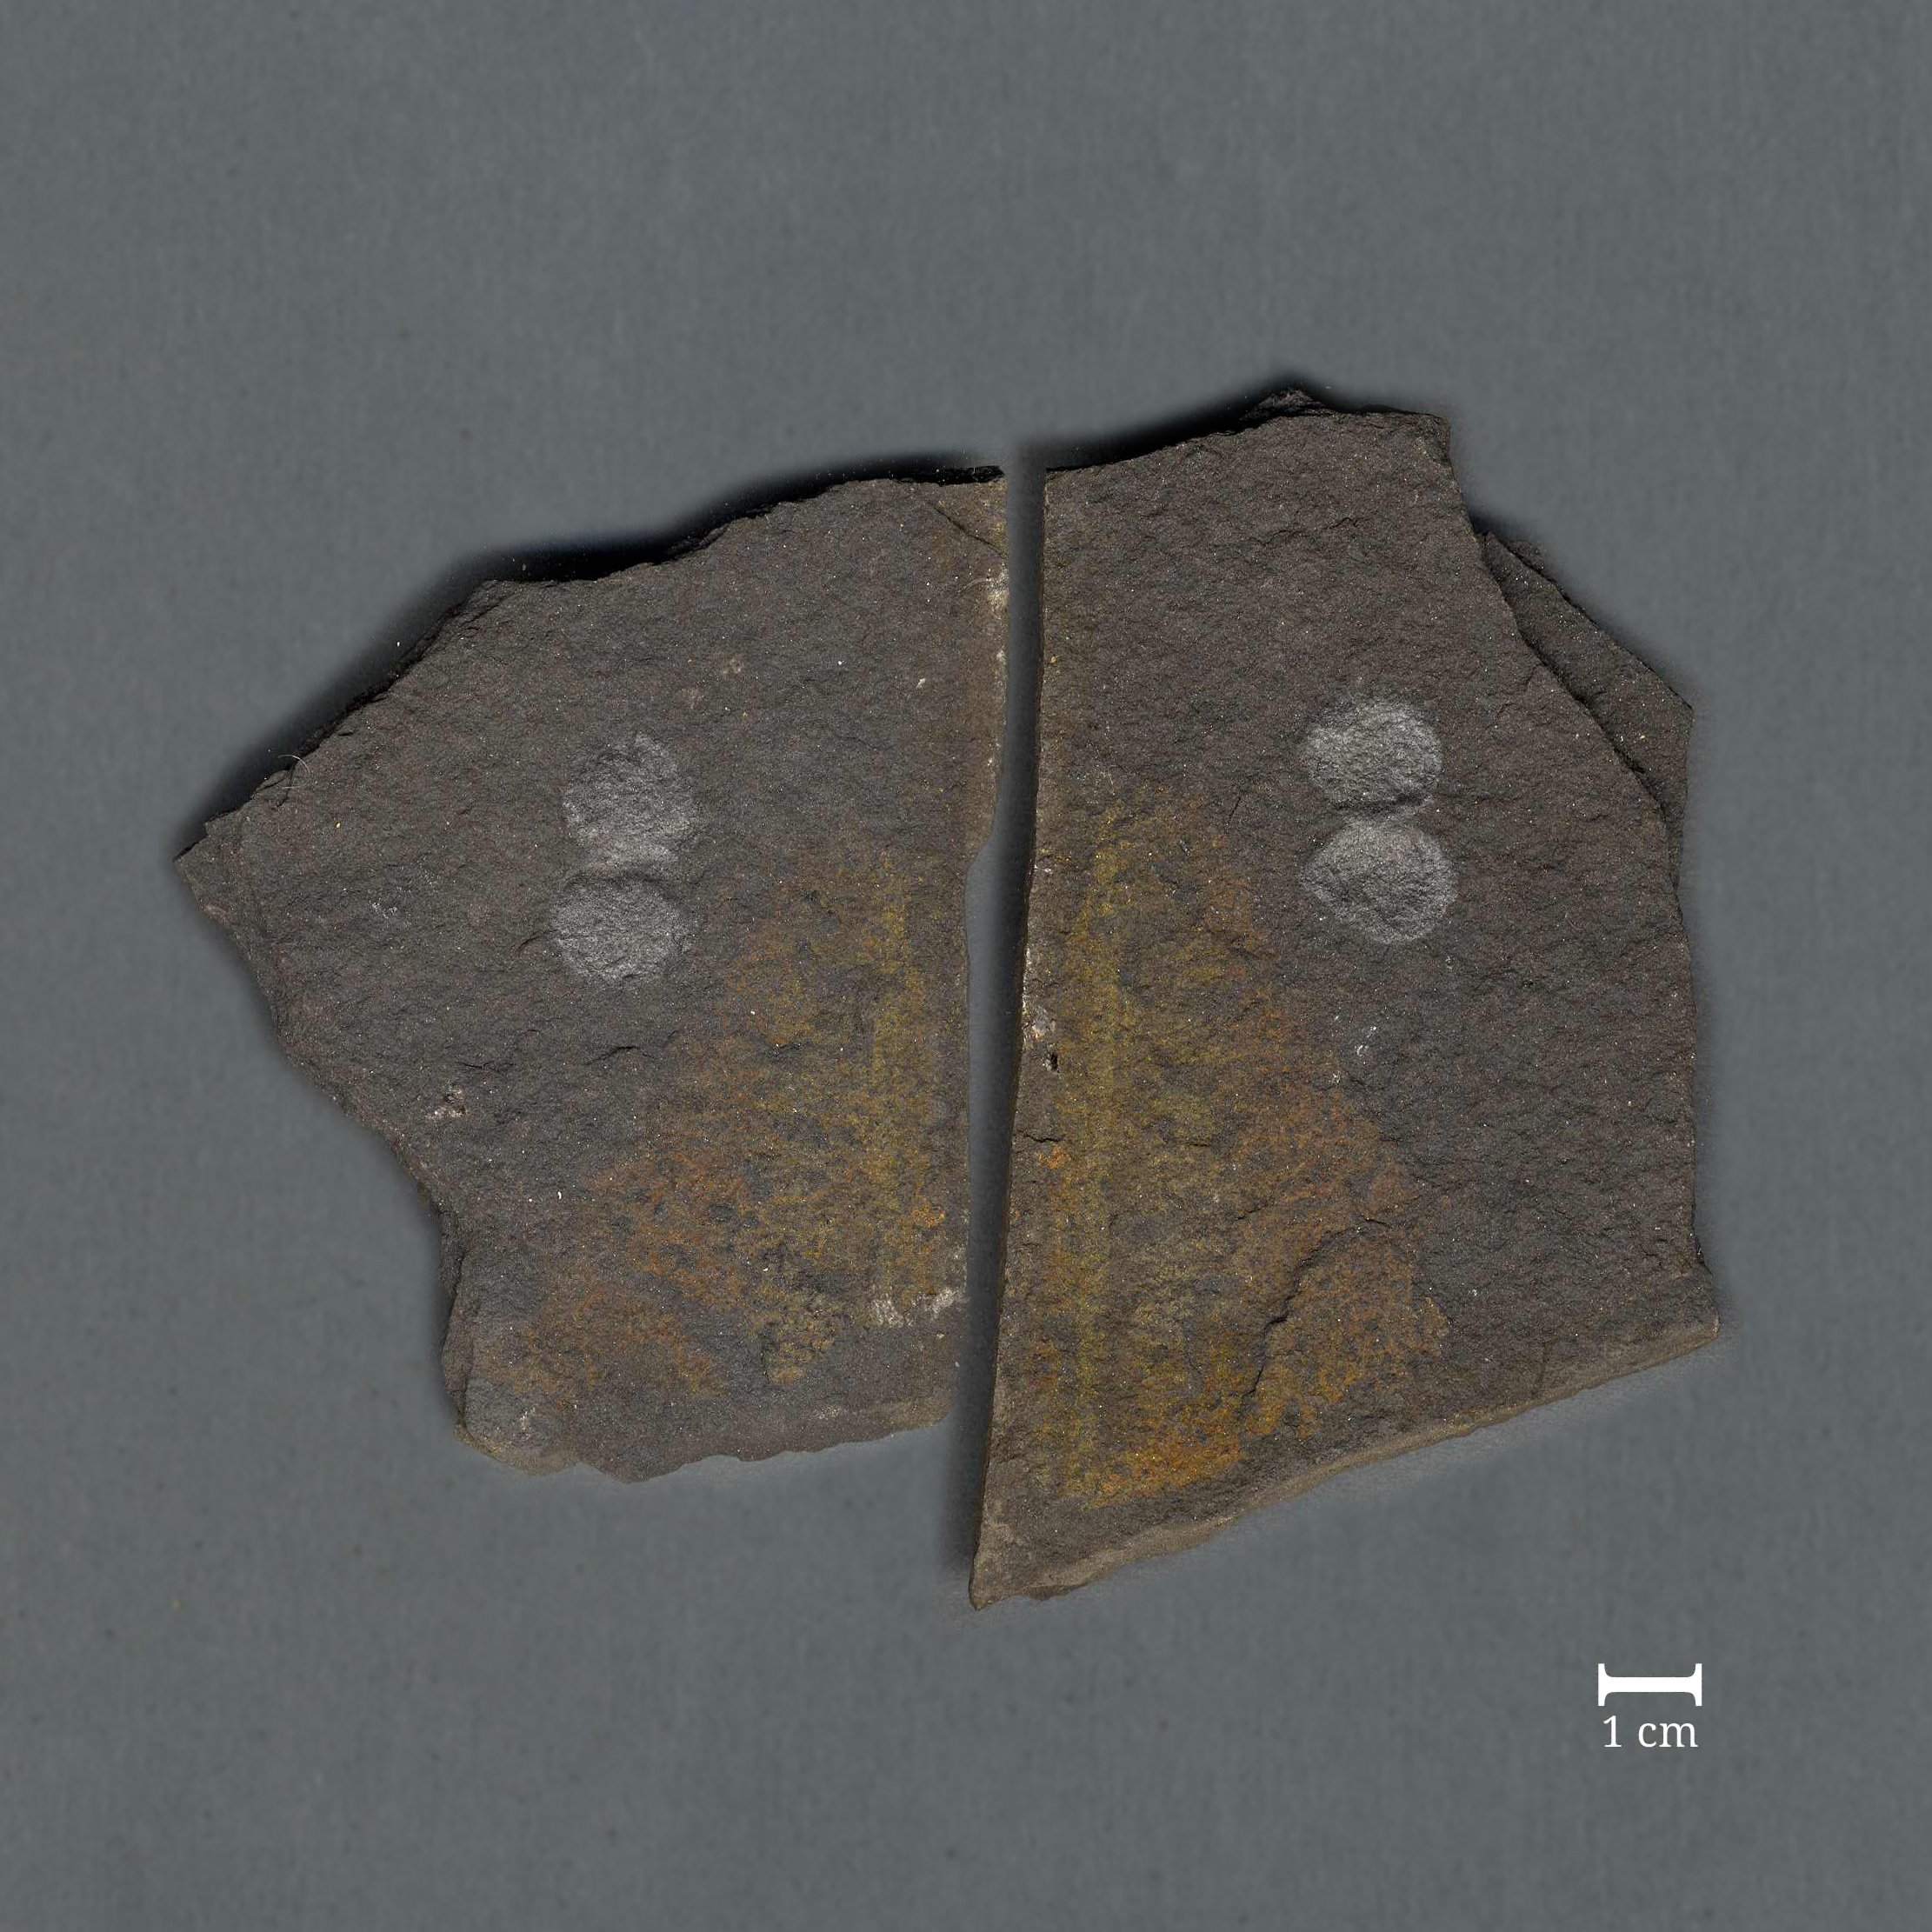 Fossil zweier Muscheln (Schizodus truncatus) [Positiv und Negativ] (Werra-Kalibergbau-Museum, Heringen/W. CC BY-NC-SA)